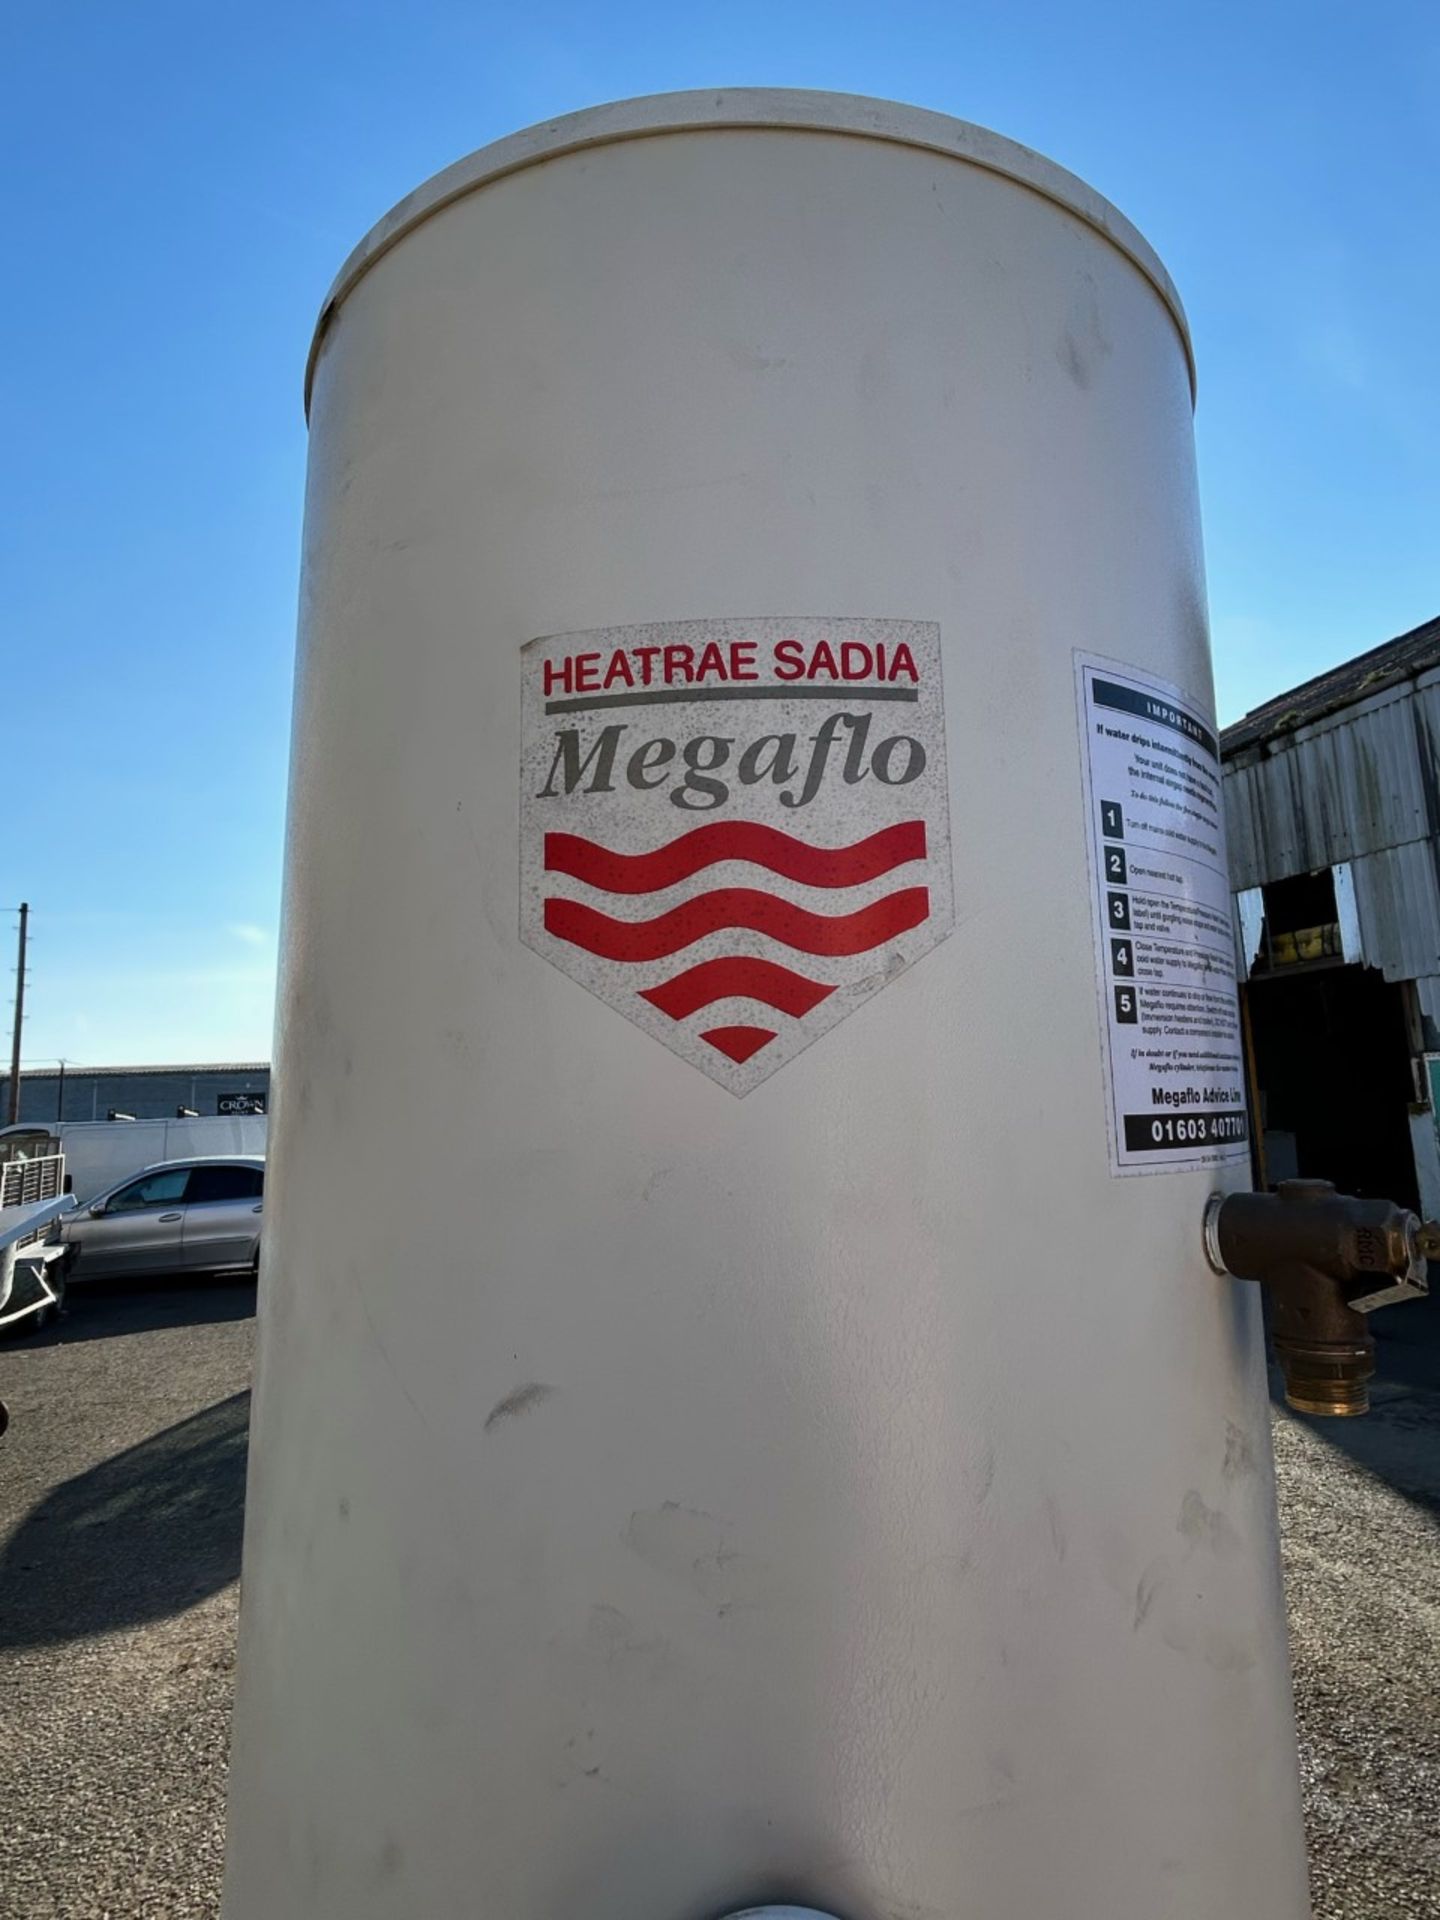 Megaflo cylinder by heatrae sadia 300DDD 240v 13A - Image 2 of 4